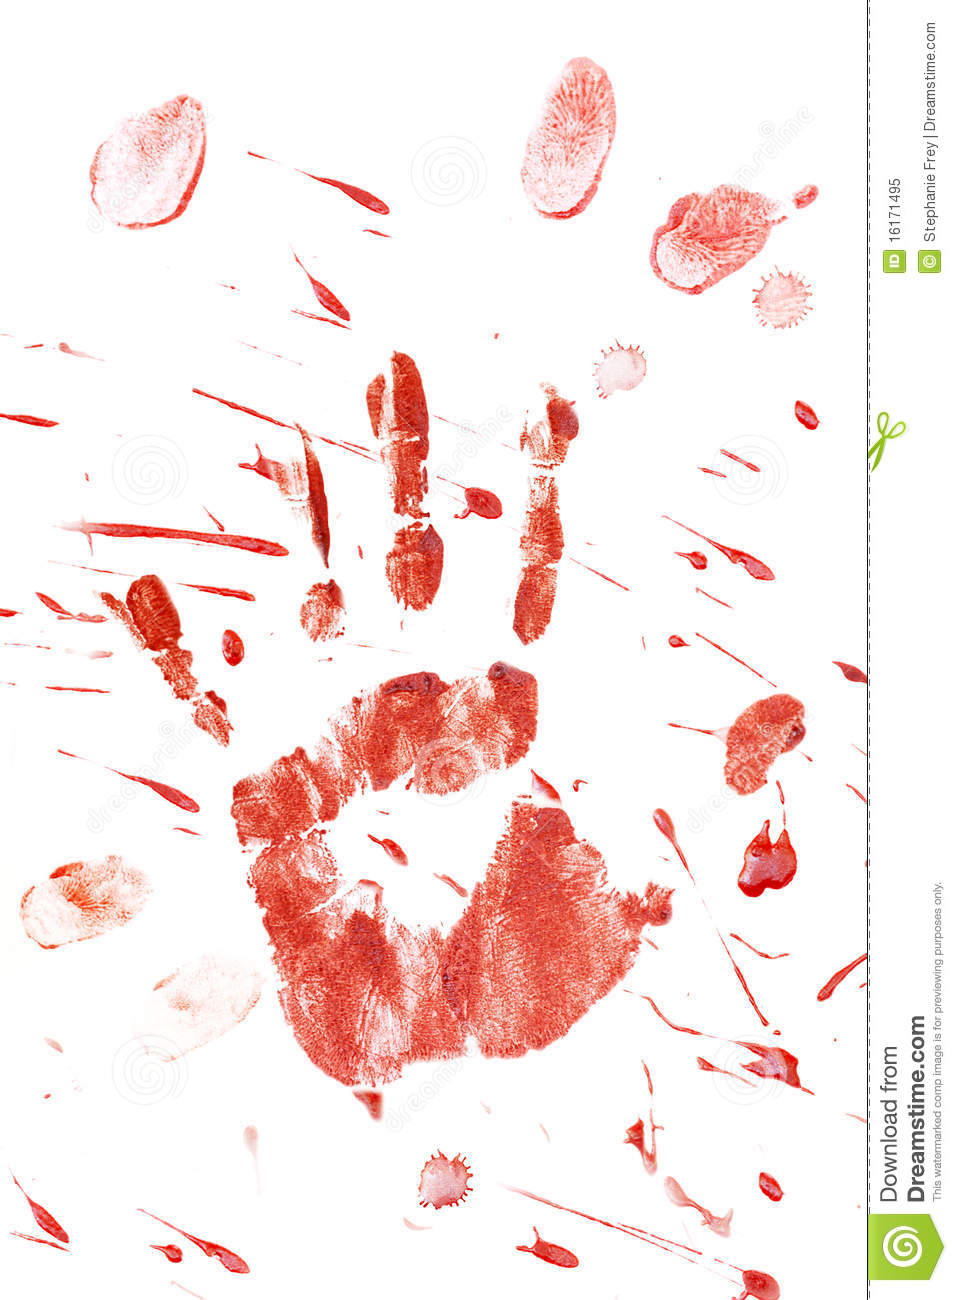 Bloody Handprint With Splatter